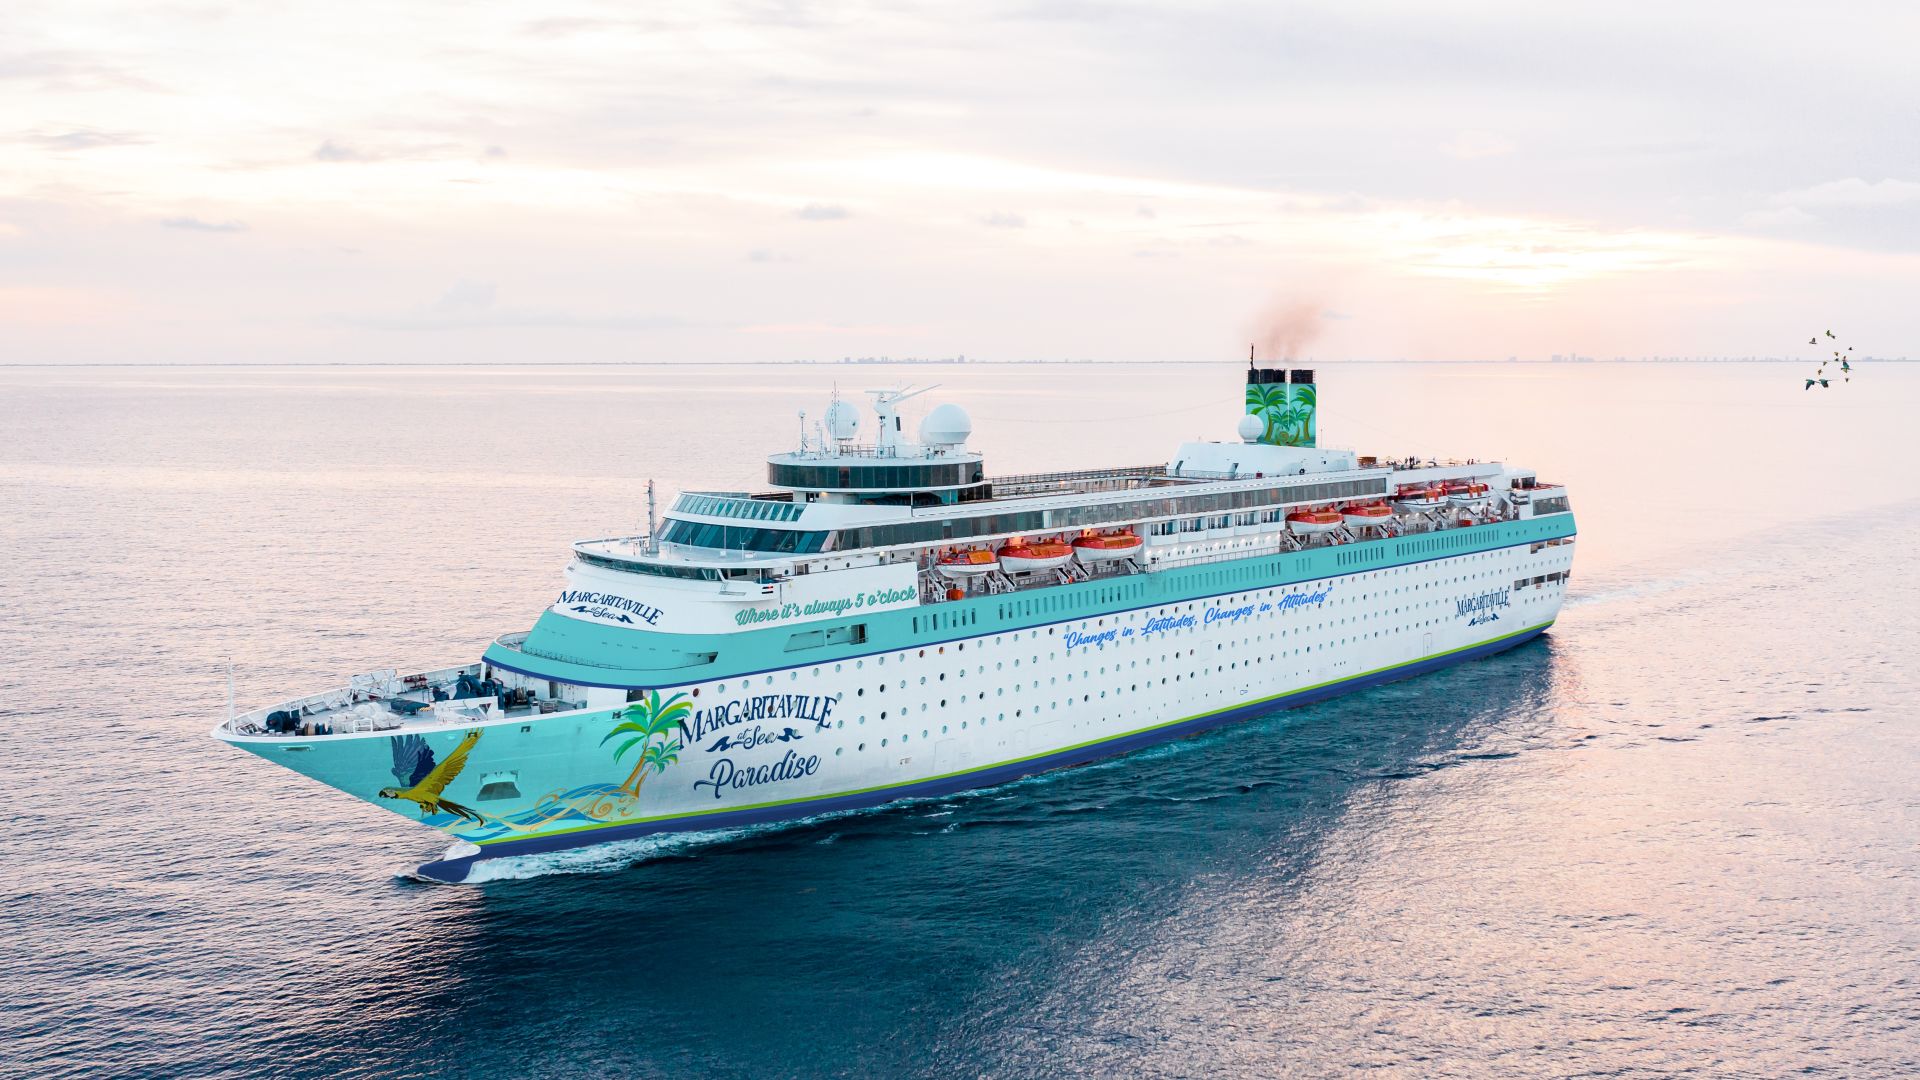 Margaritaville Cruise Line on the sea